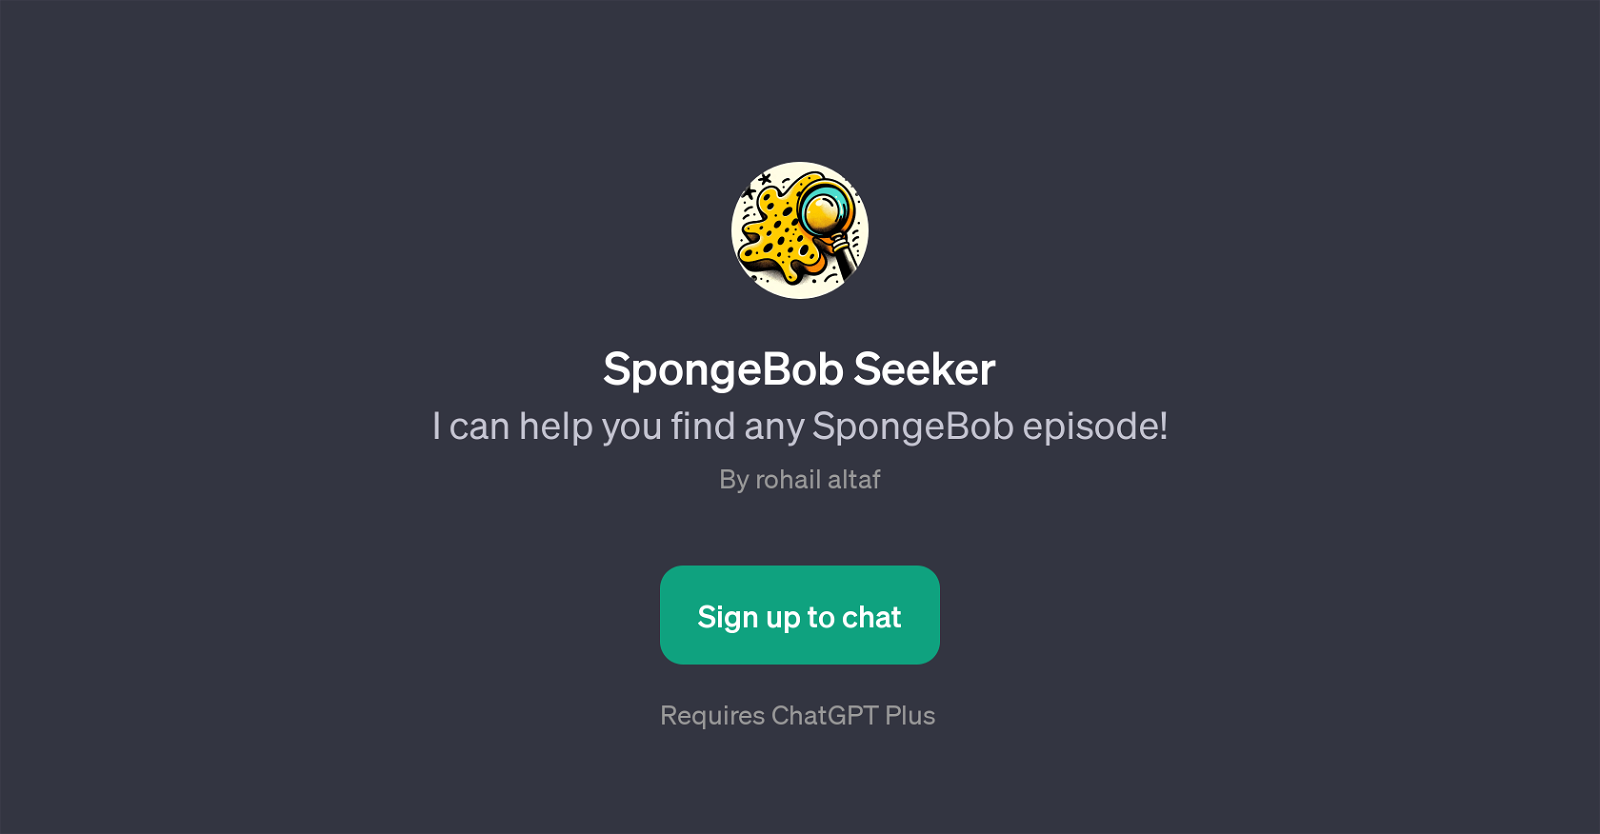 SpongeBob Seeker website